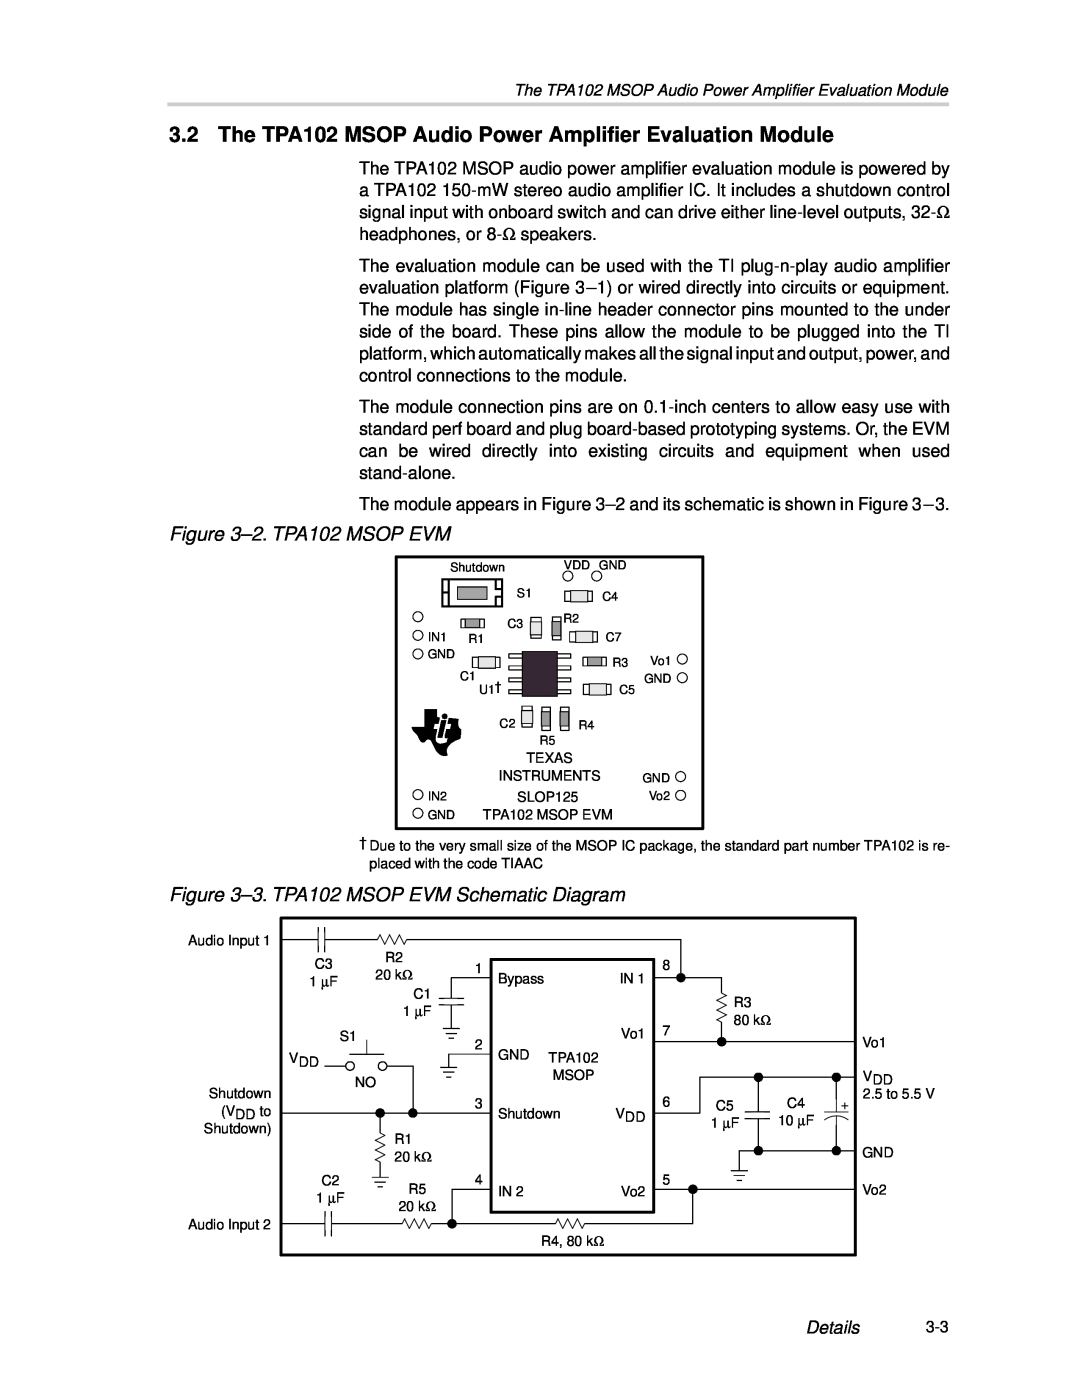 Texas Instruments manual 2.TPA102 MSOP EVM, 3.TPA102 MSOP EVM Schematic Diagram, Details 